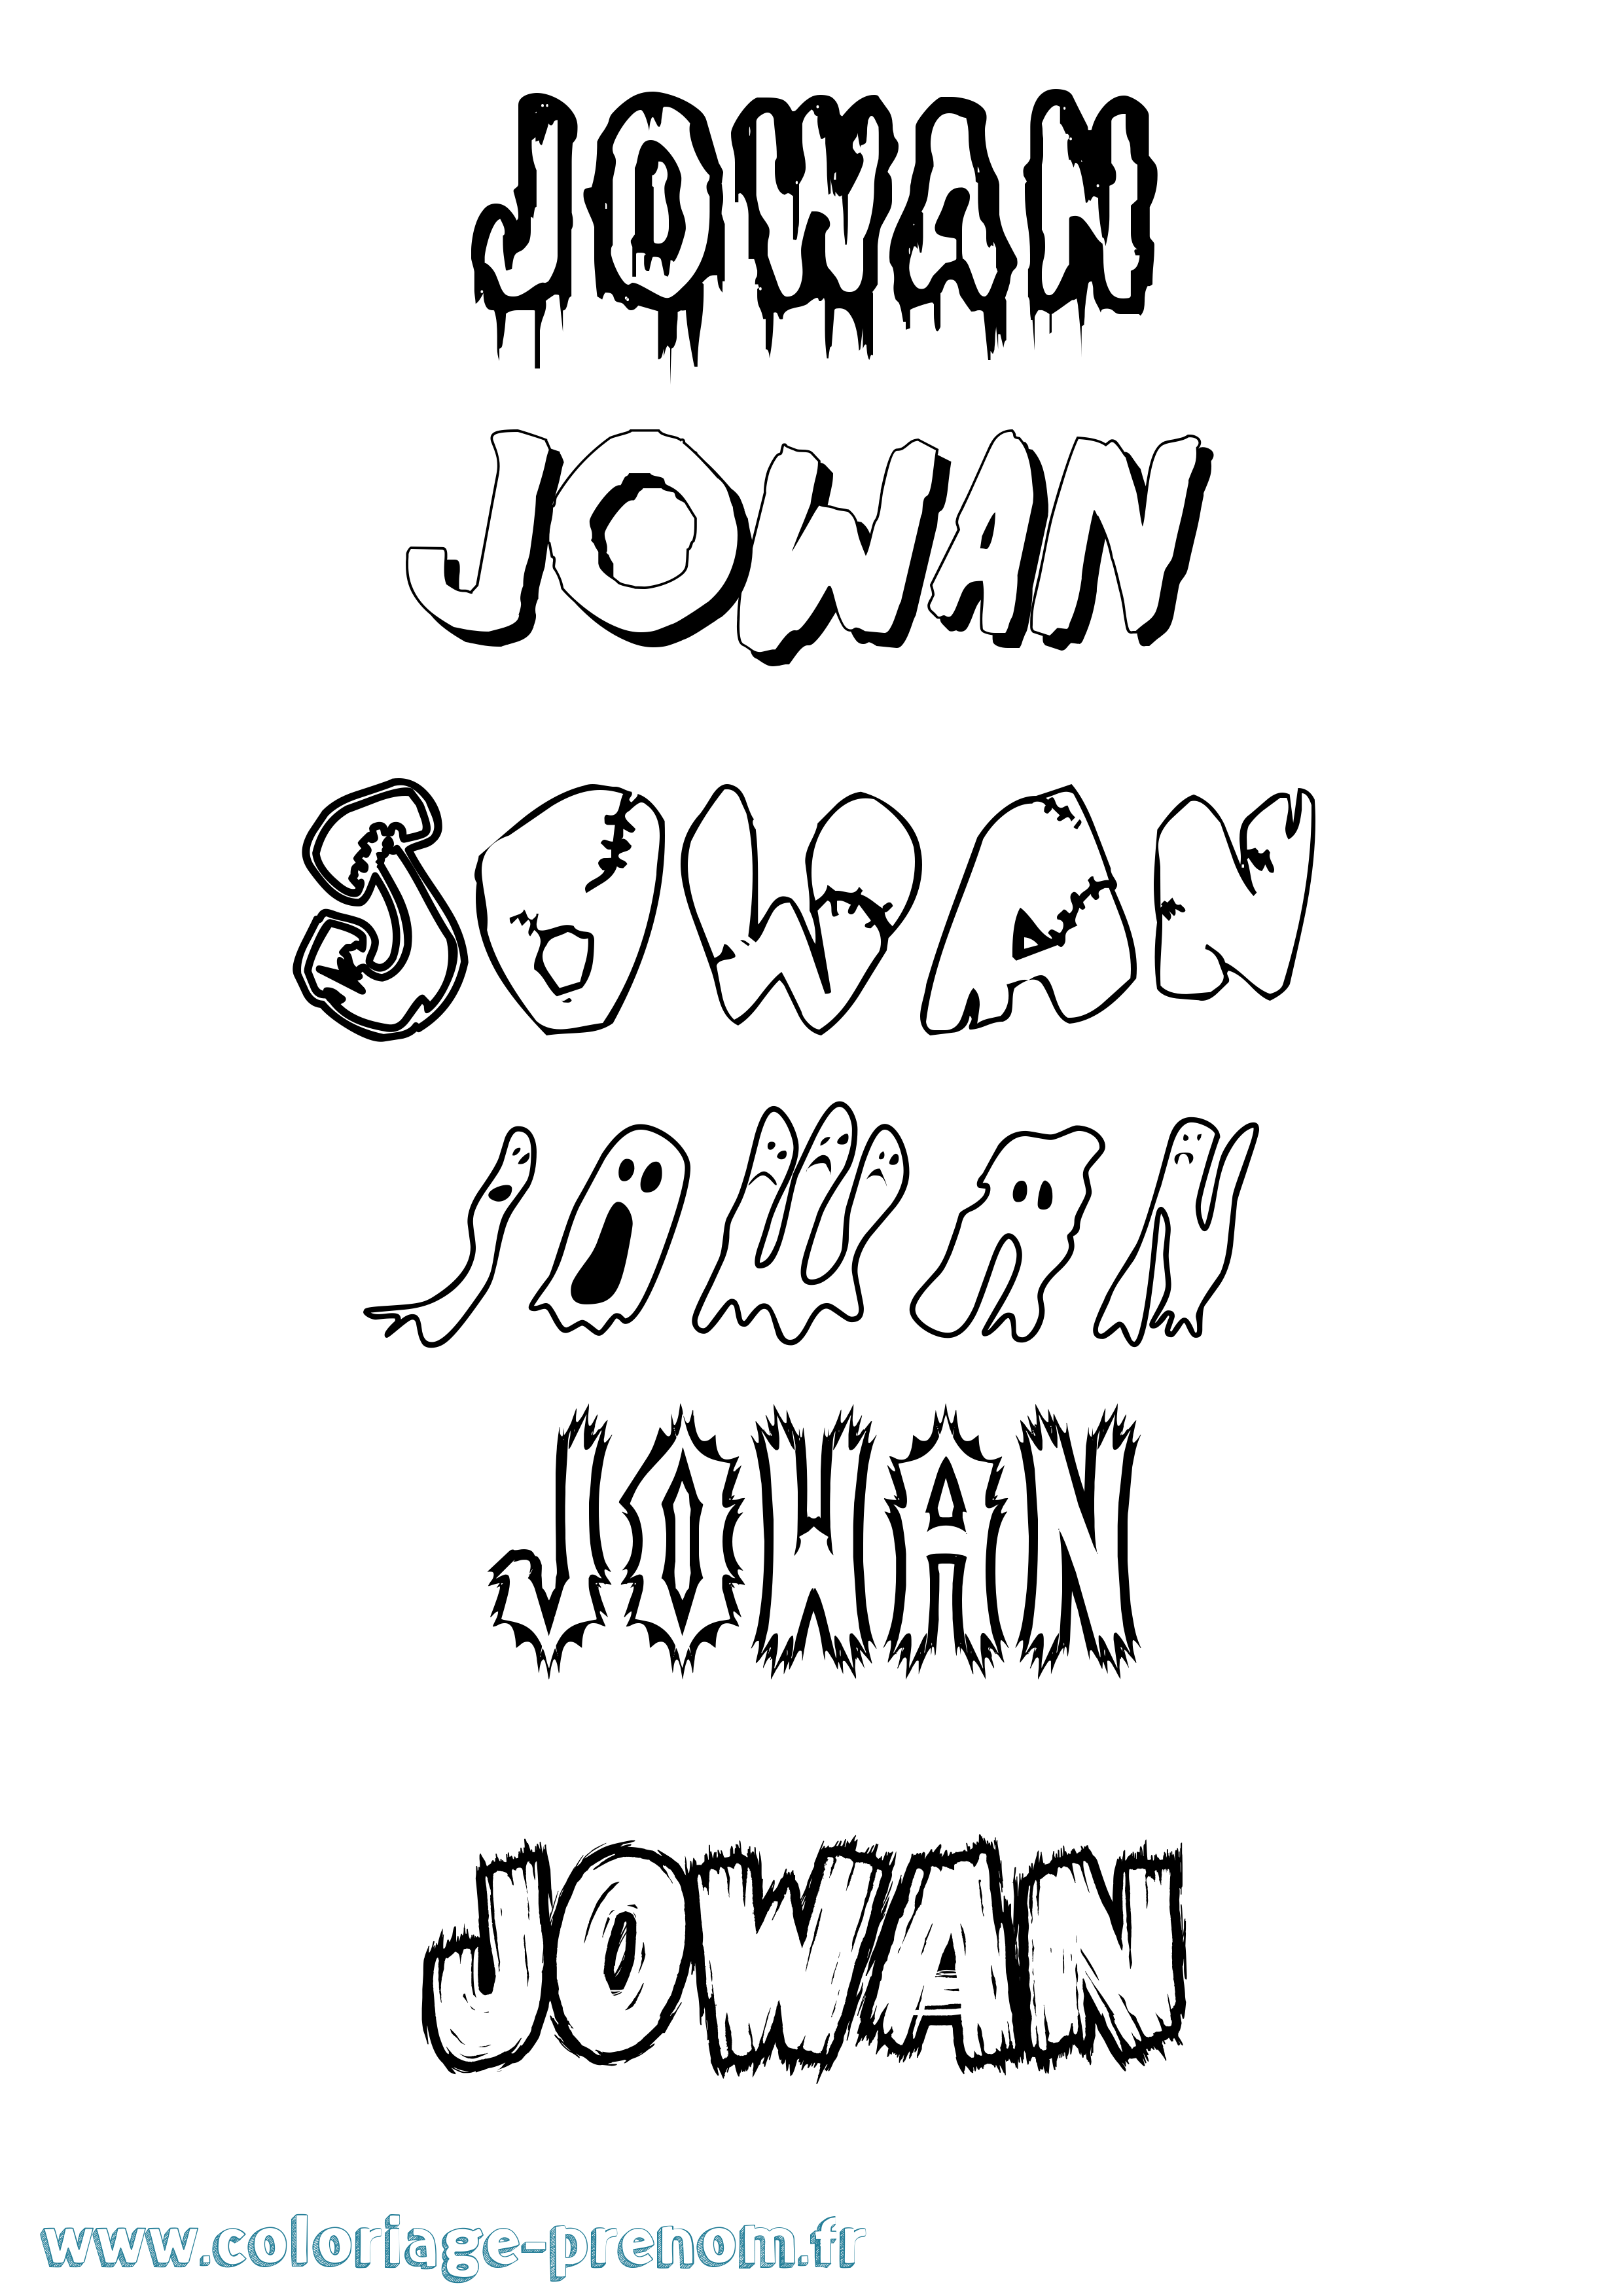 Coloriage prénom Jowan Frisson